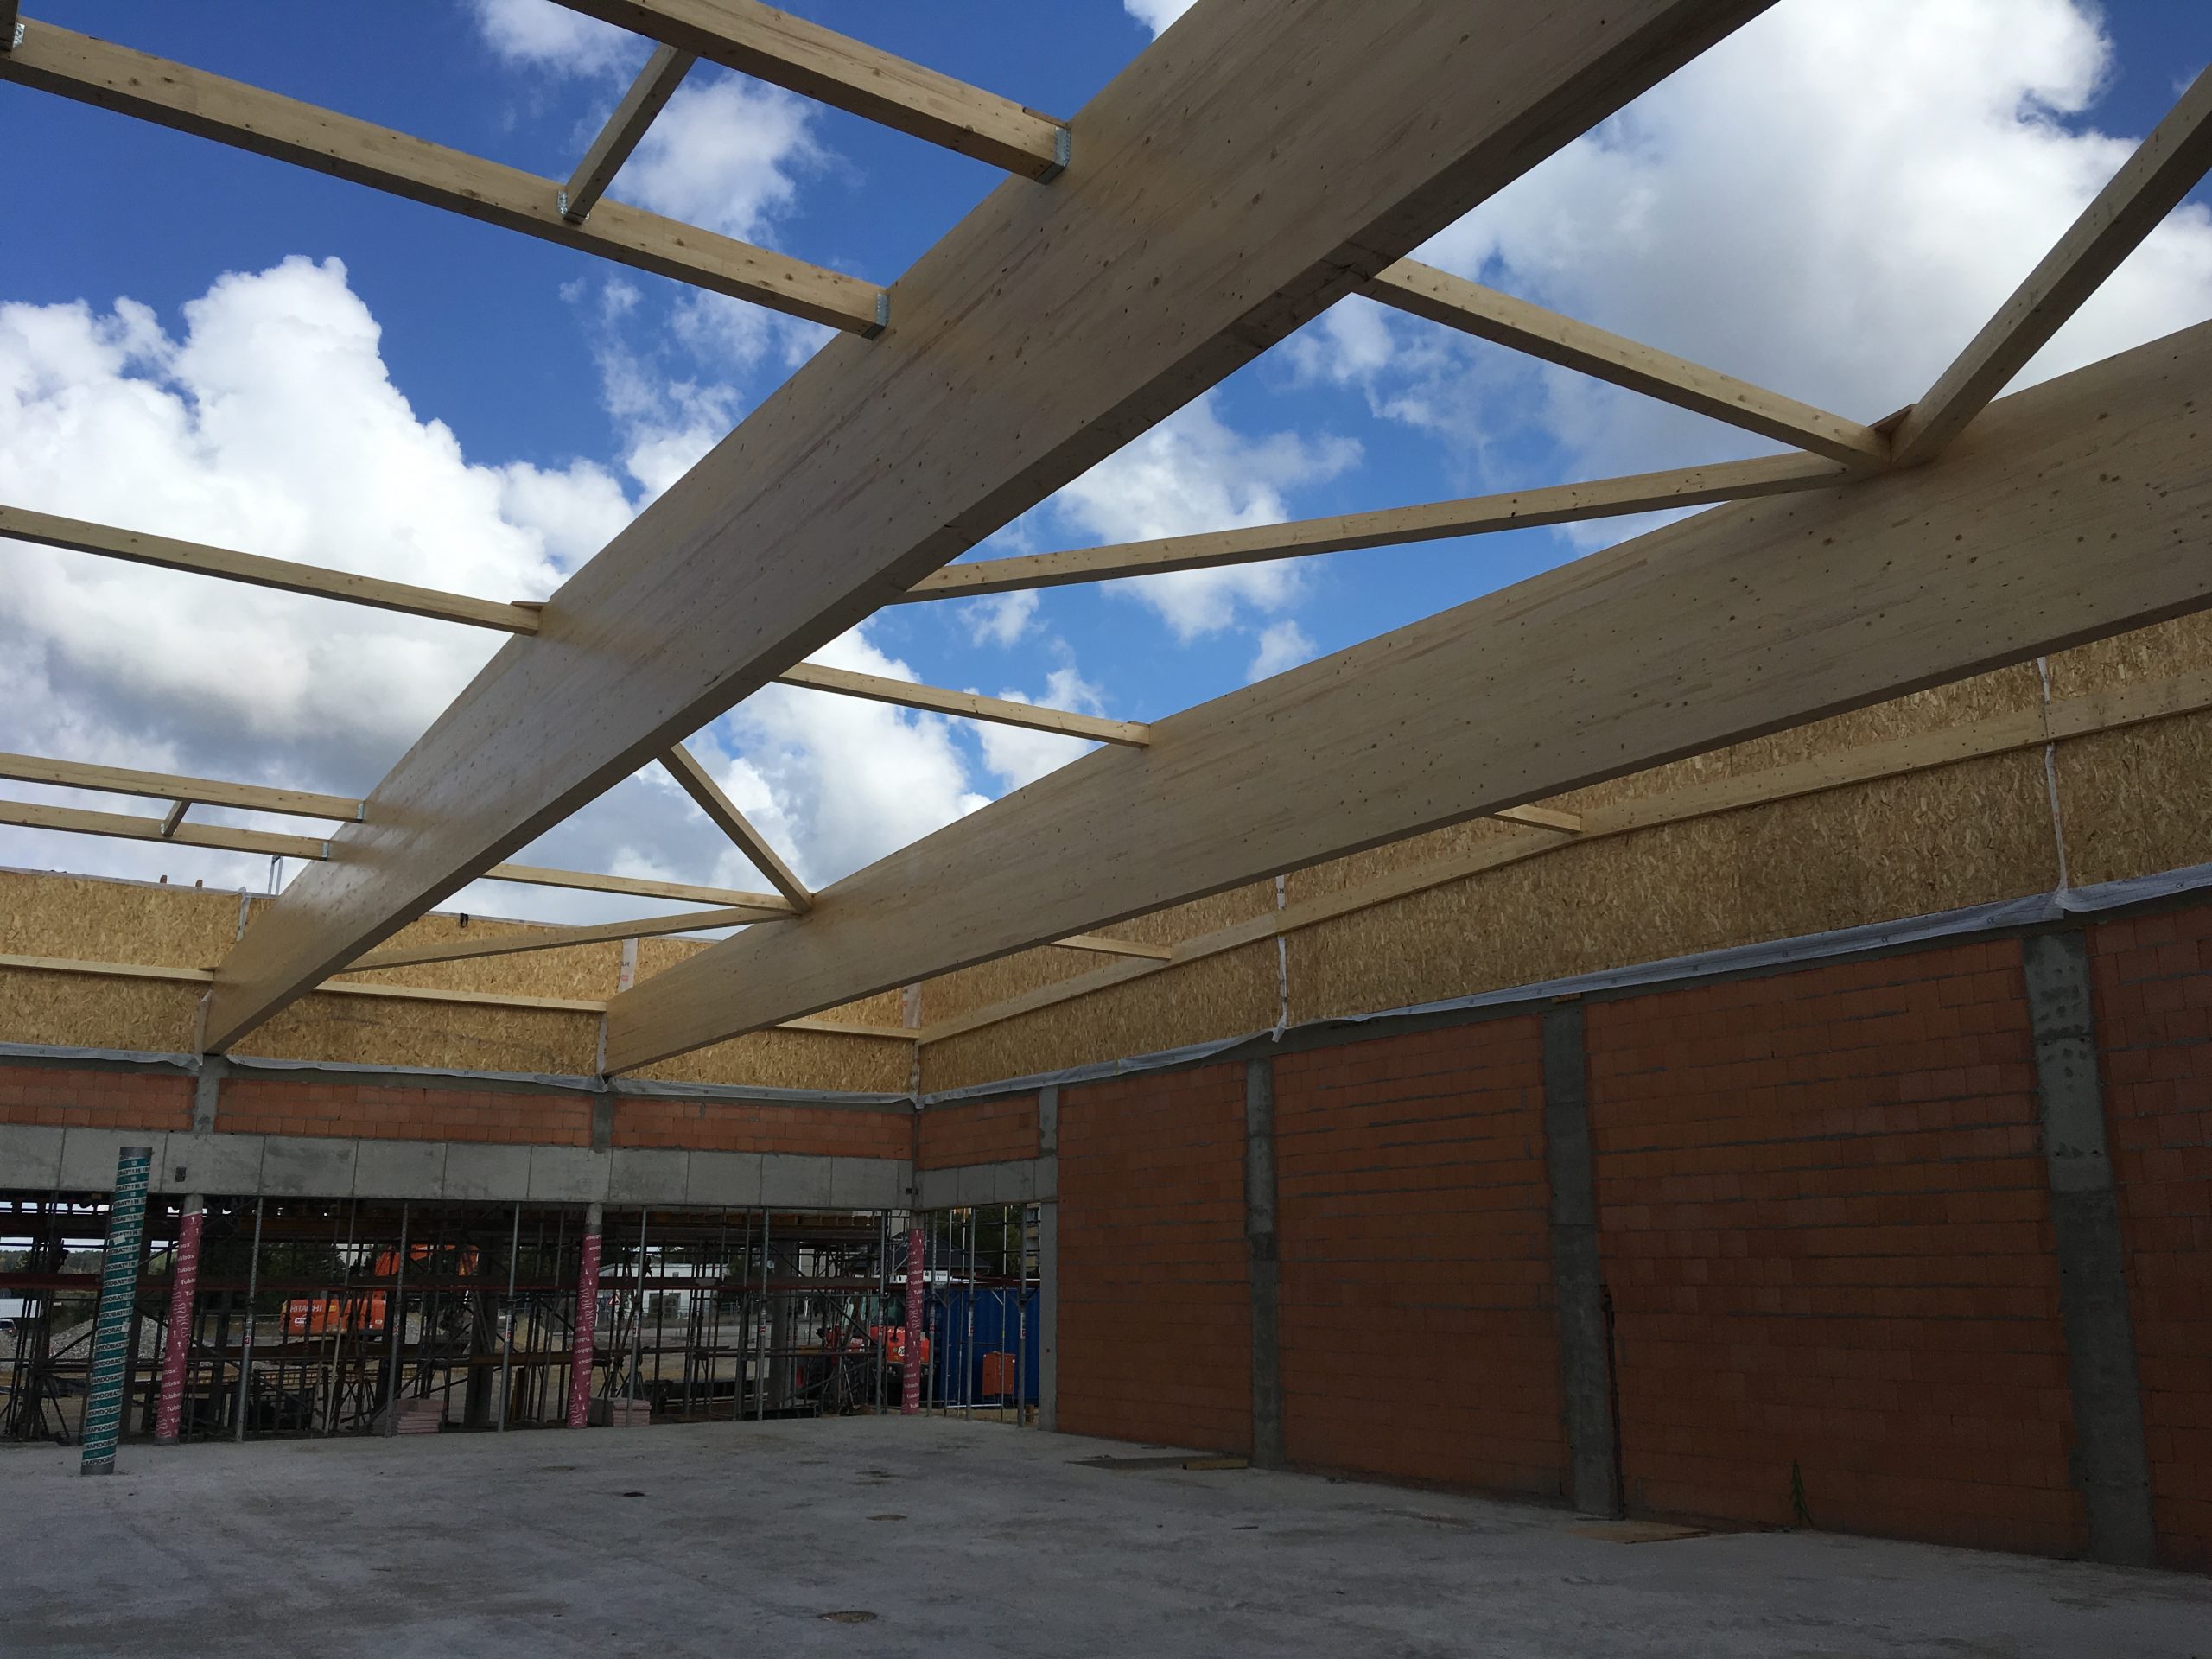 Satteldachbinder Lebensmittelmarkt Verbrauchermarkt Leimholz Dachkonstruktion Holzrahmenbauwand